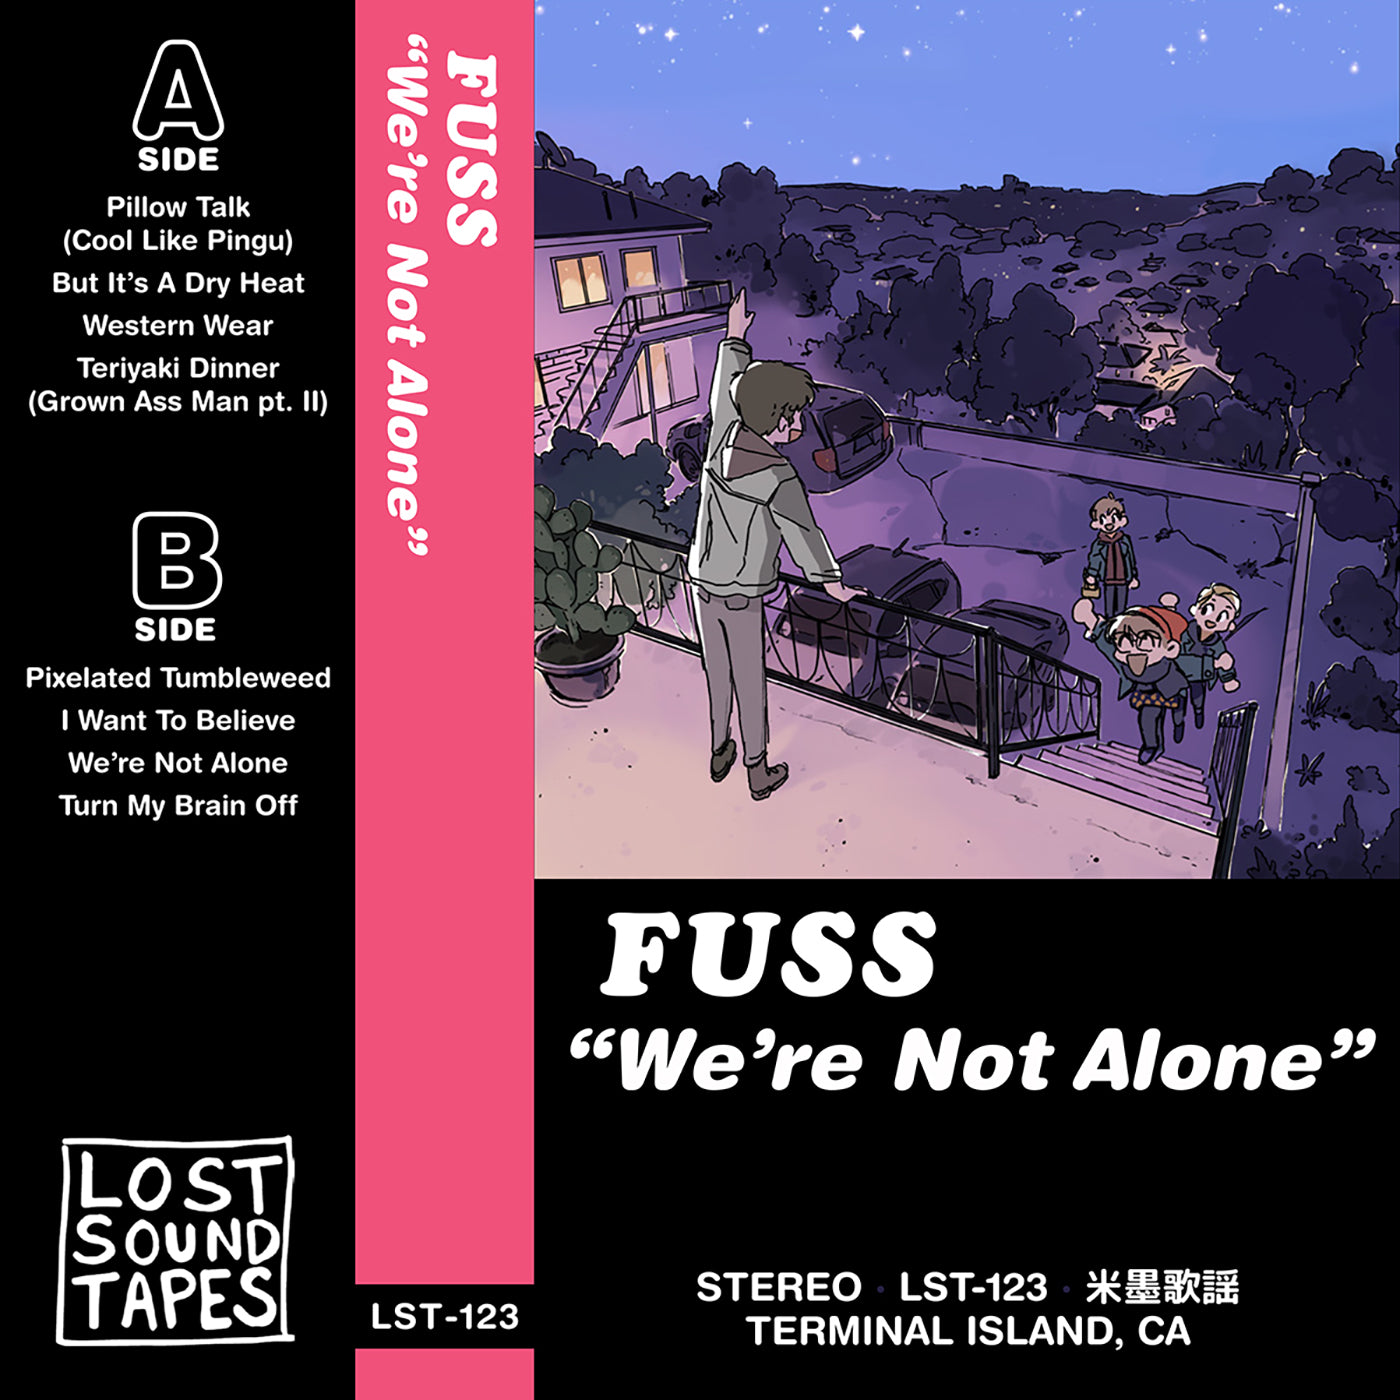 FUSS "We're Not Alone" cassette tape